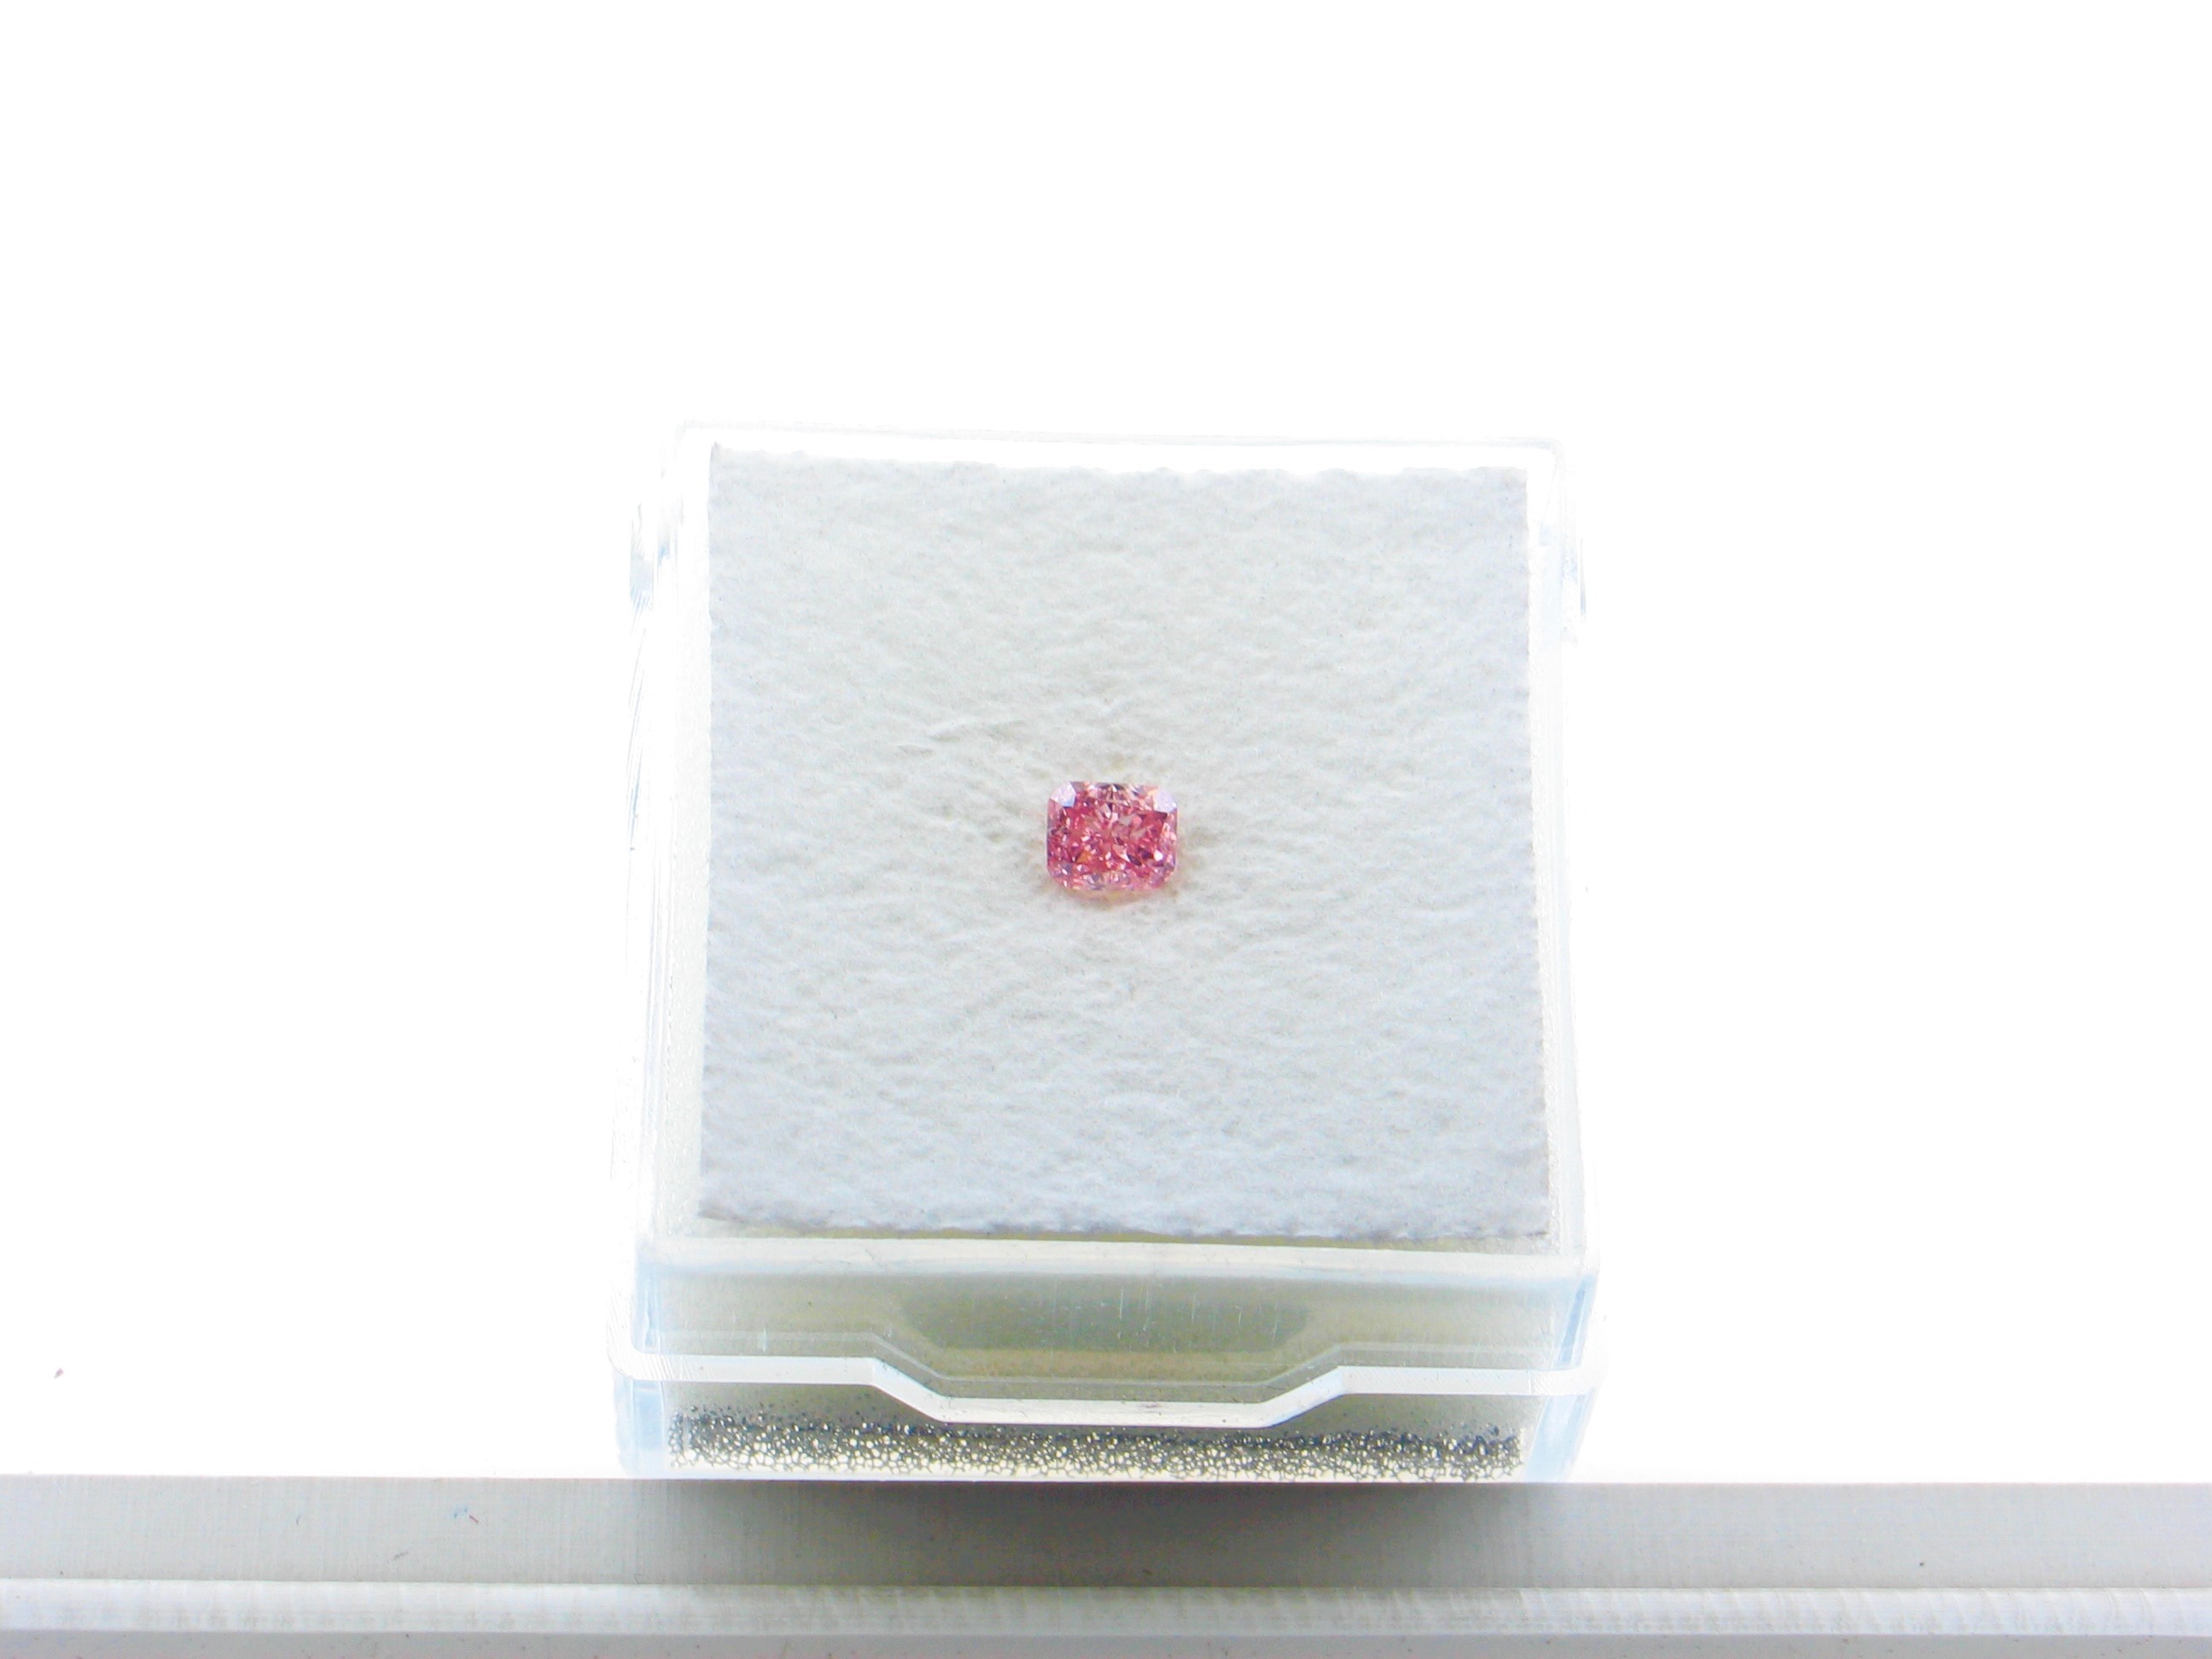 Fancy Pink Diamond Necklace - Dalby Diamonds